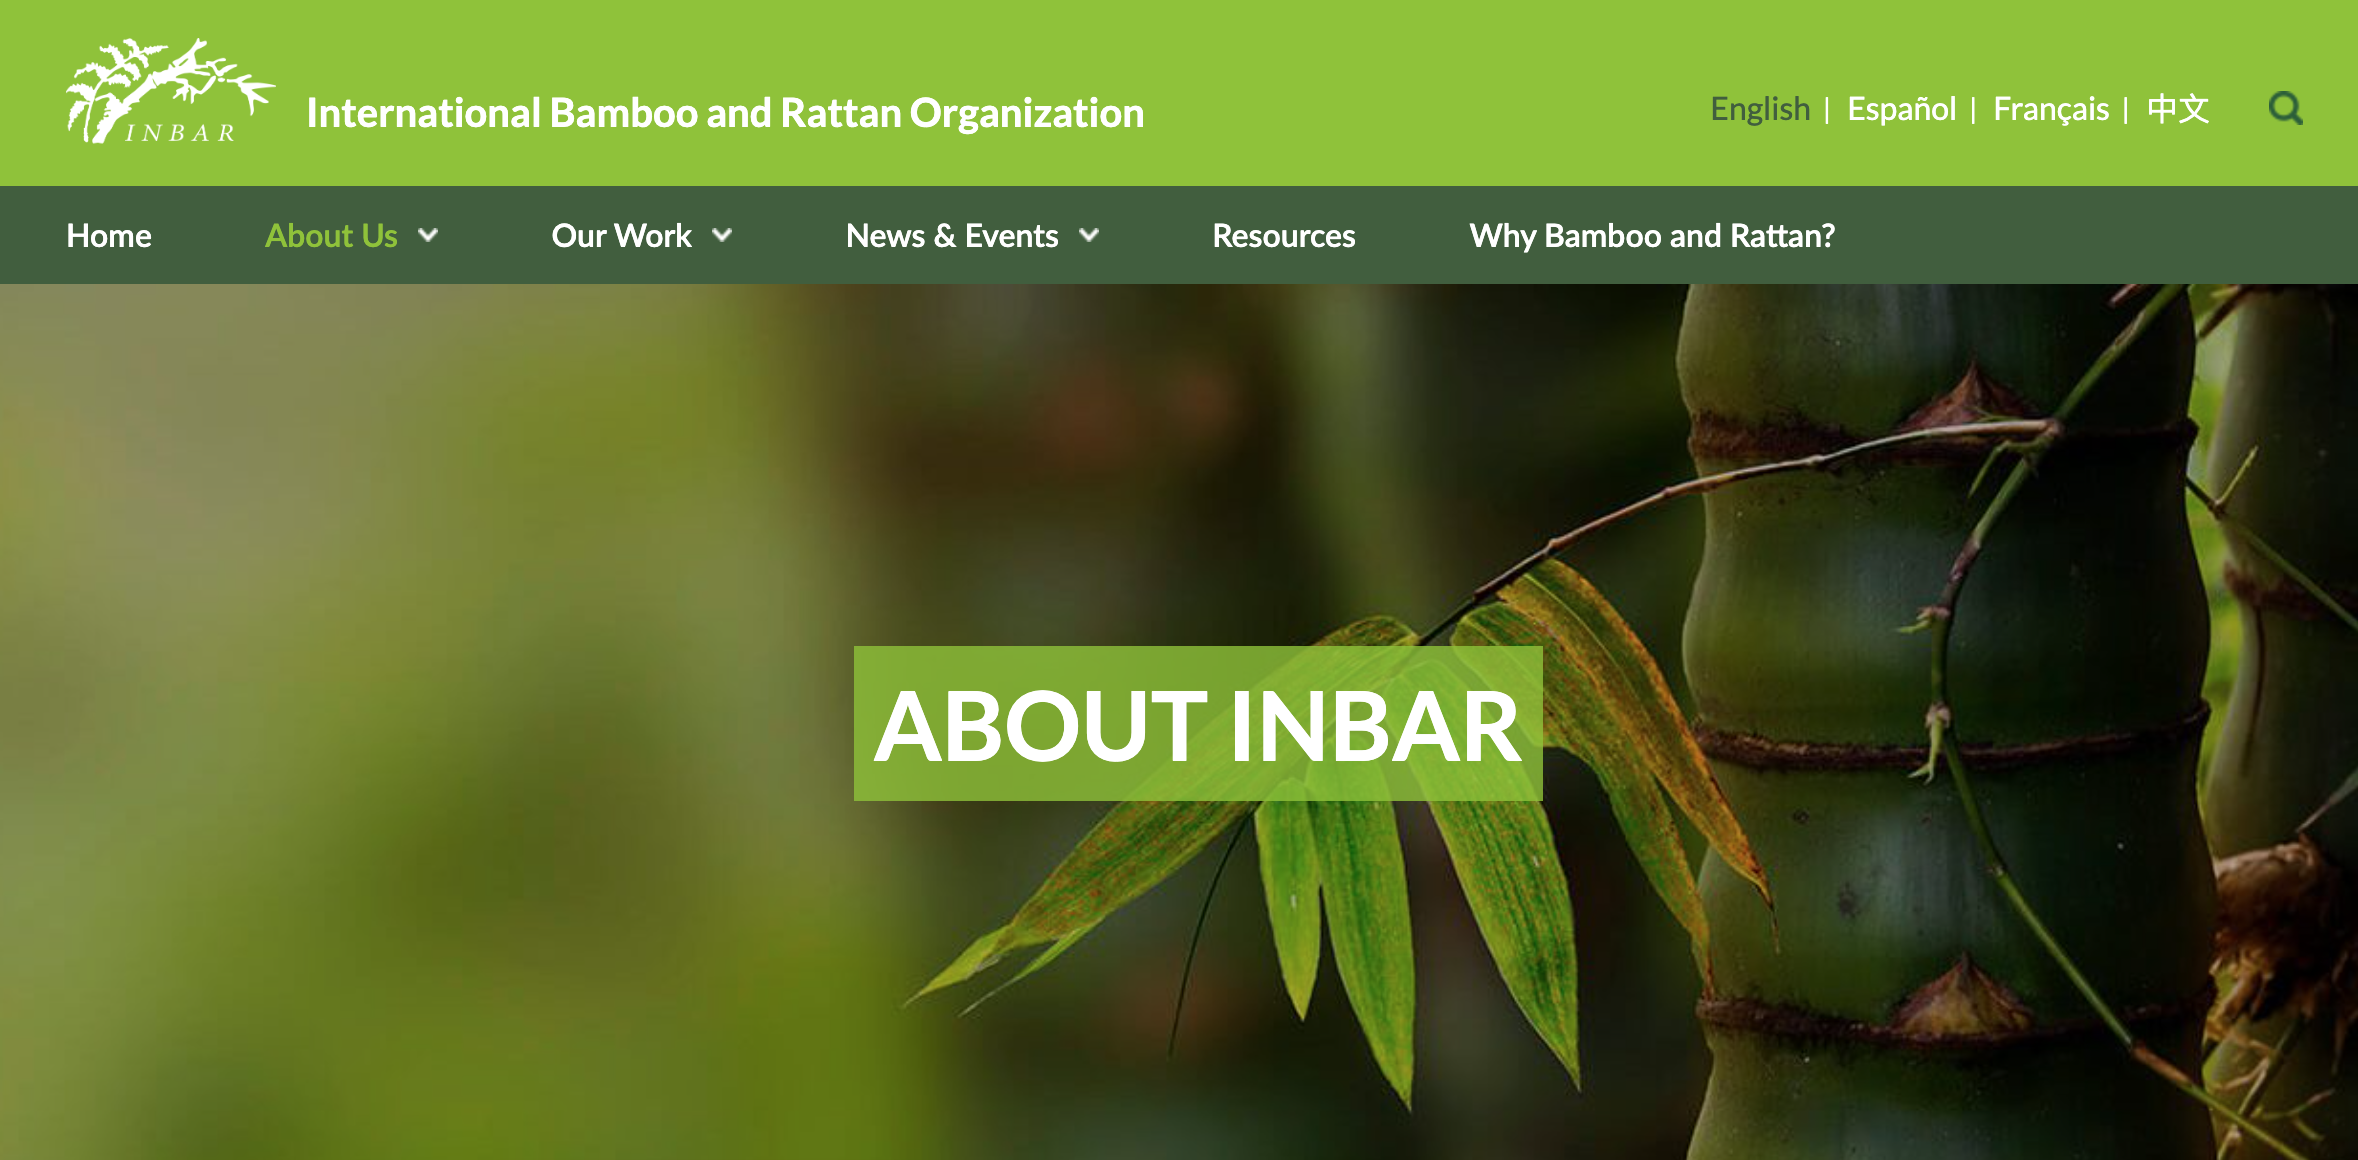 Welcome, International Bamboo and Rattan Organization